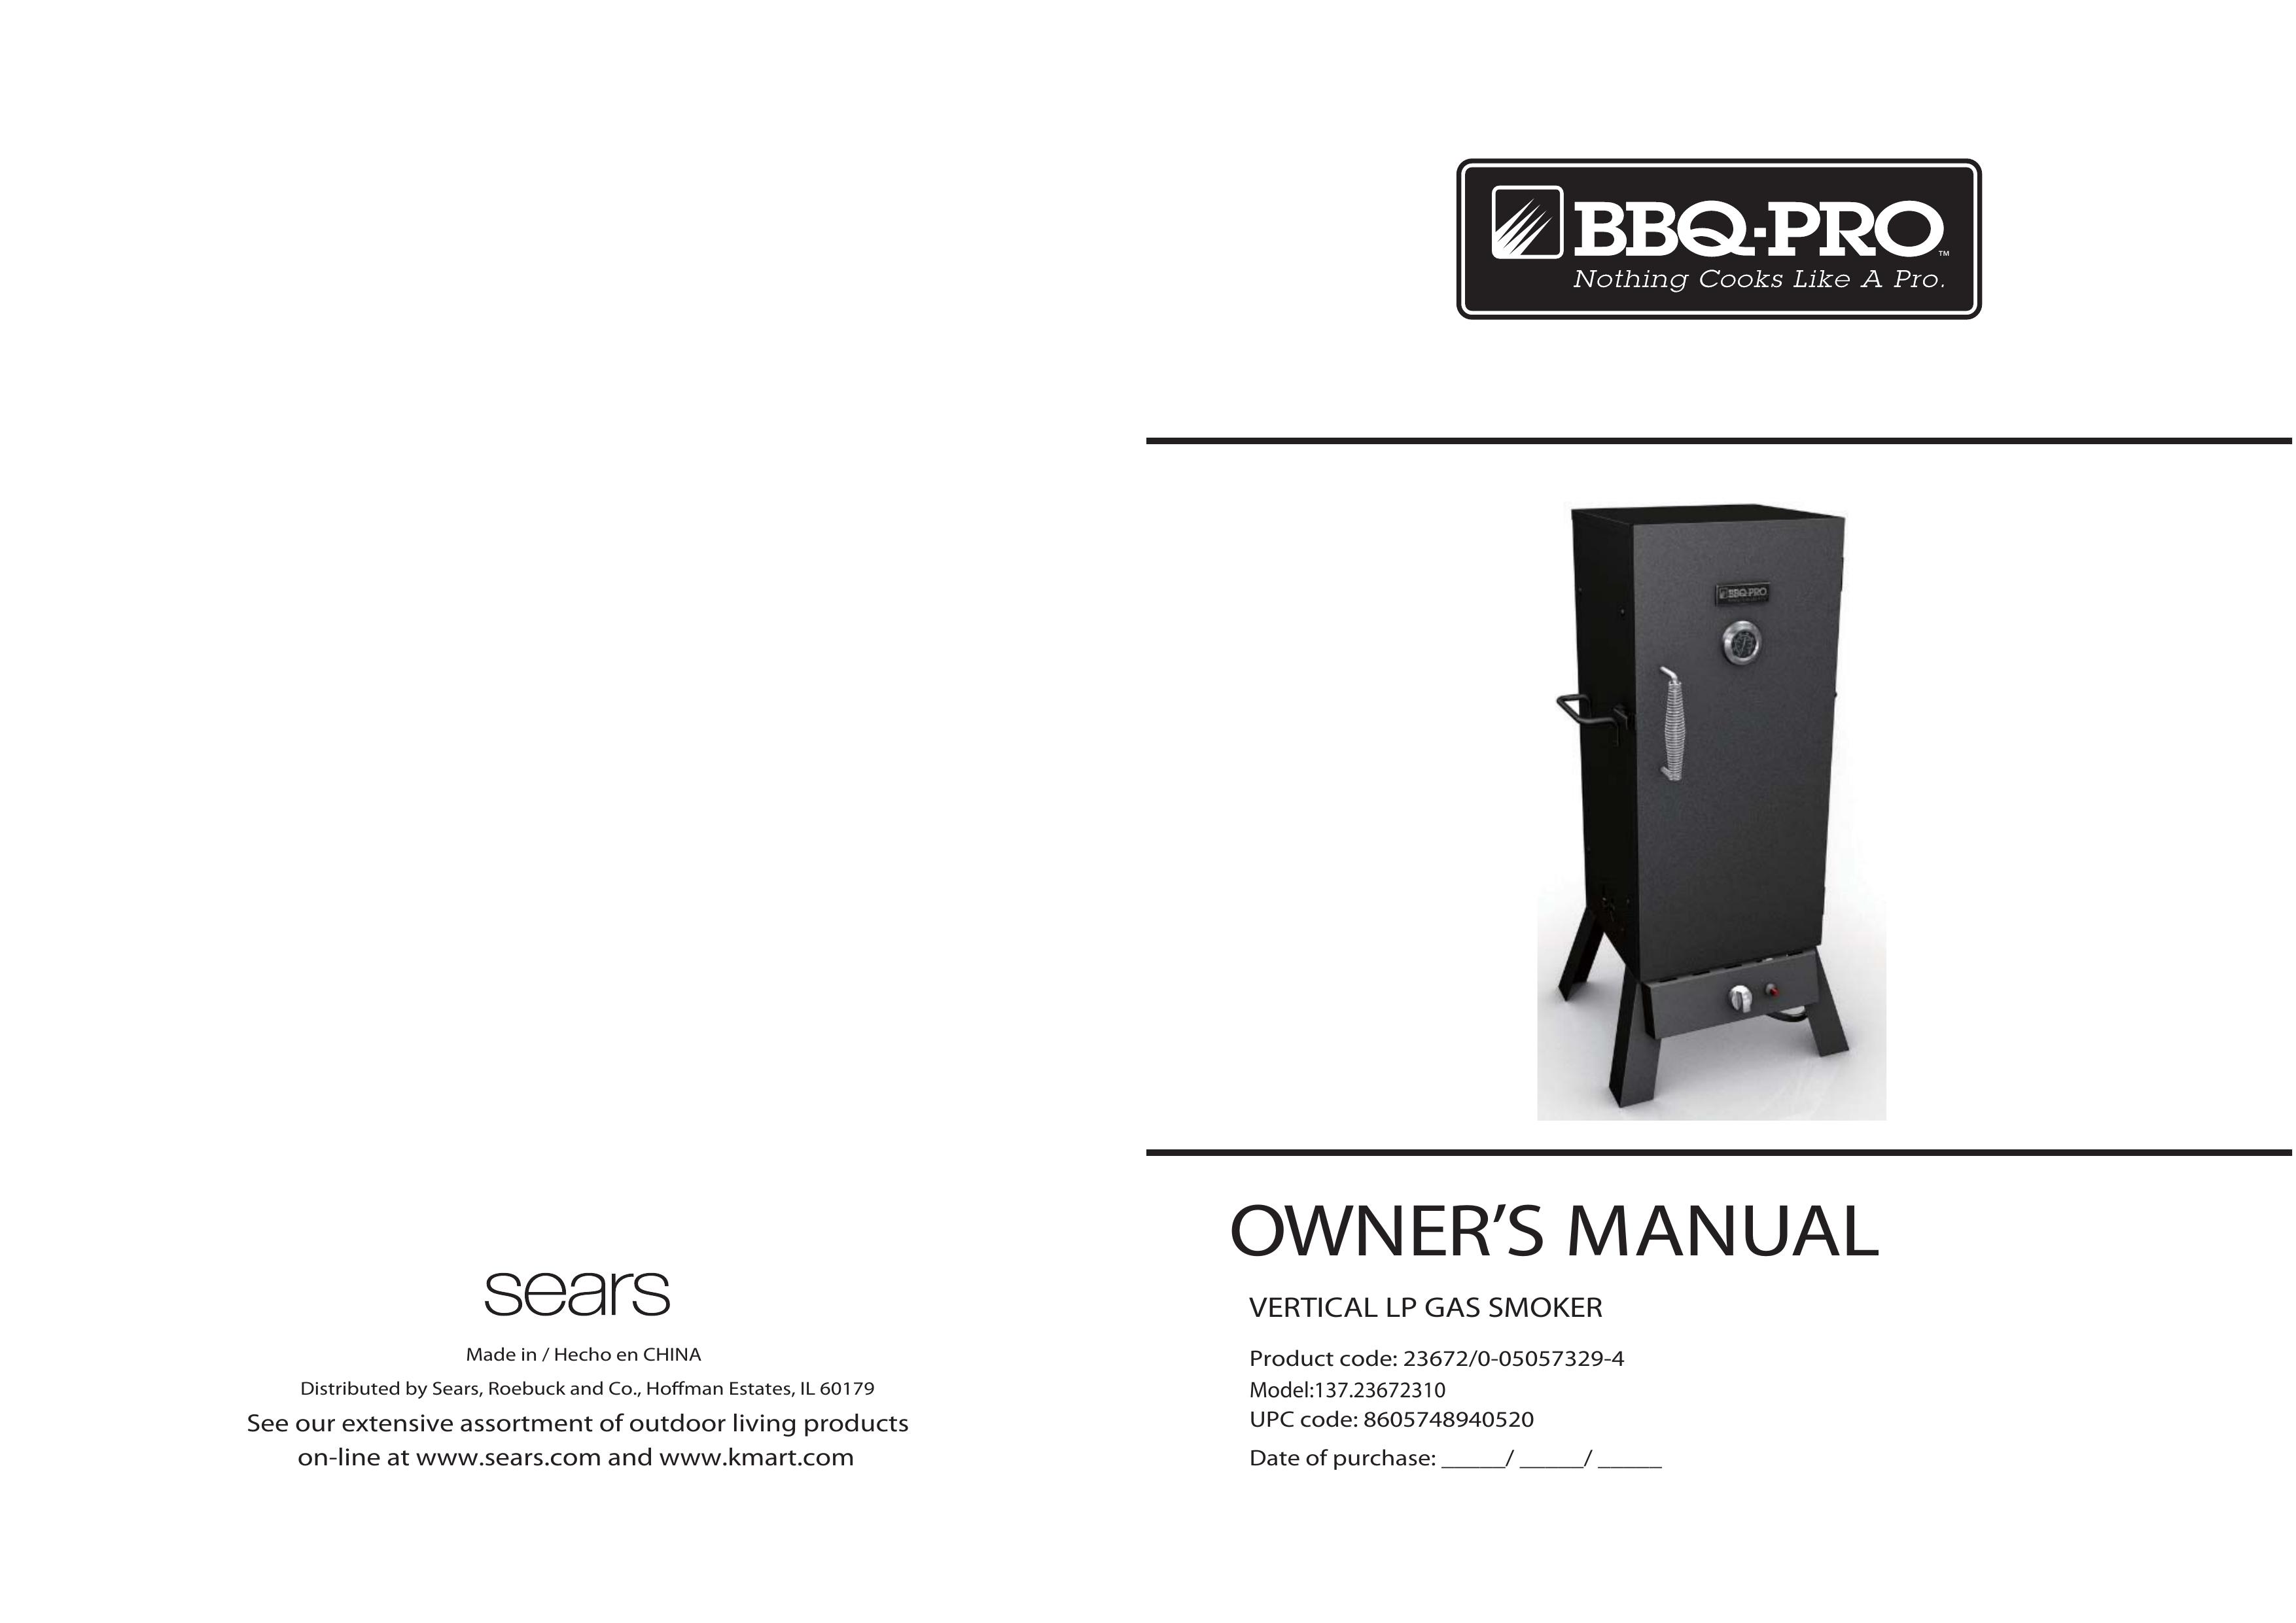 BBQ Pro 137.23672310 Smoker User Manual